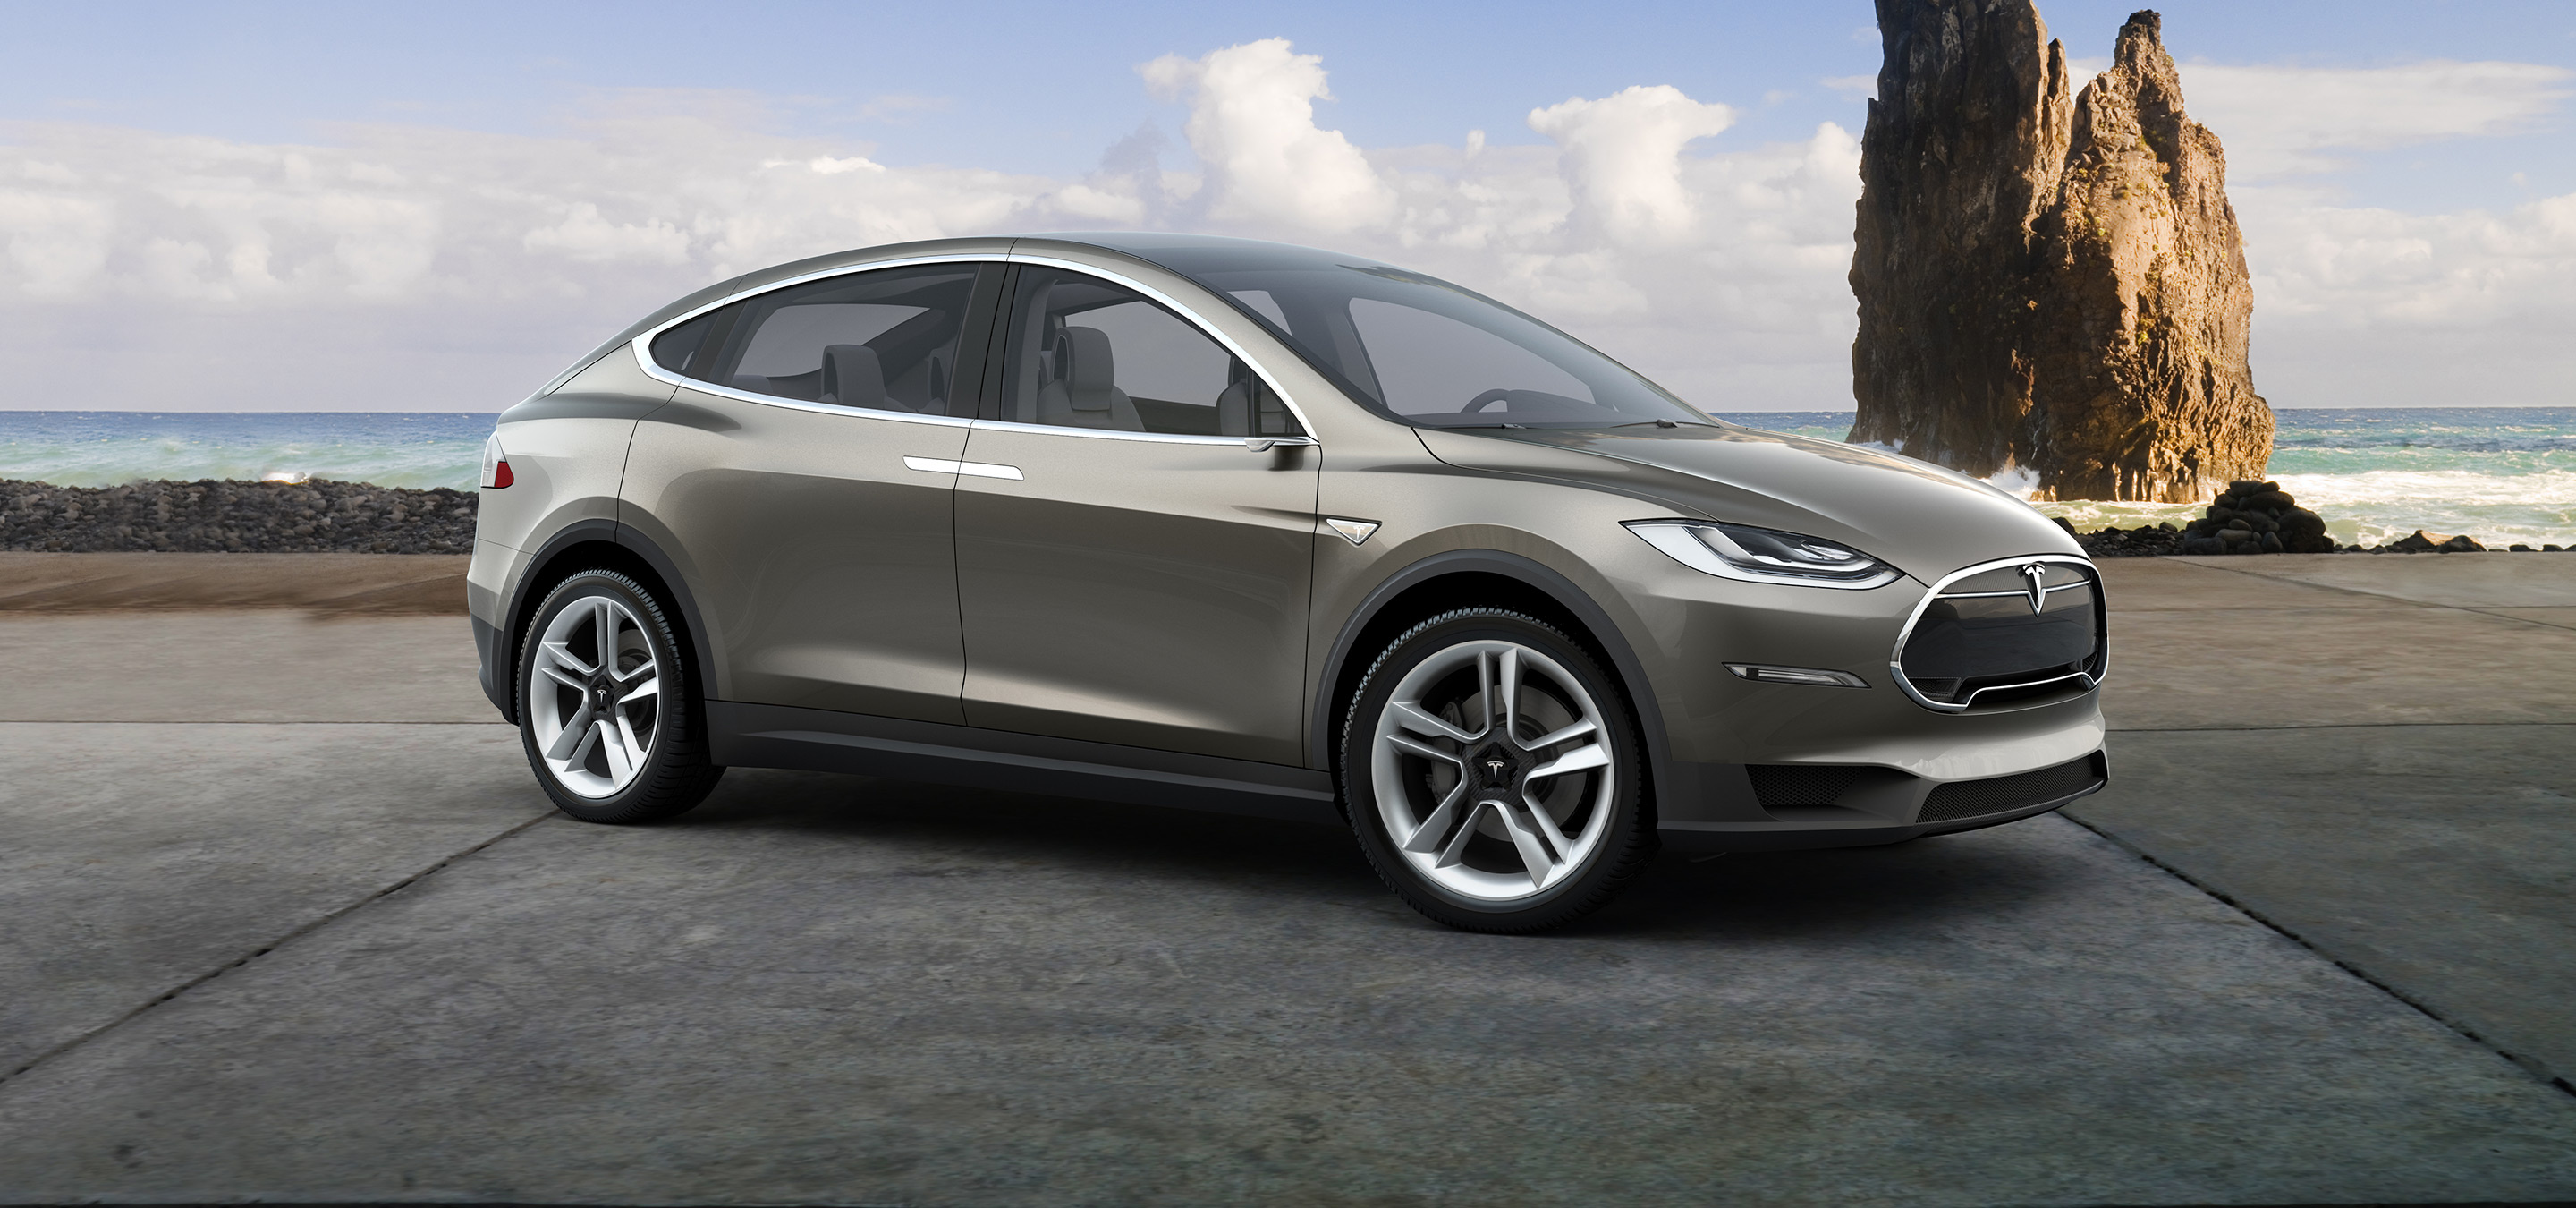 Tesla Model X, September release, Cutting-edge technology, Luxury SUV, 2880x1350 Dual Screen Desktop